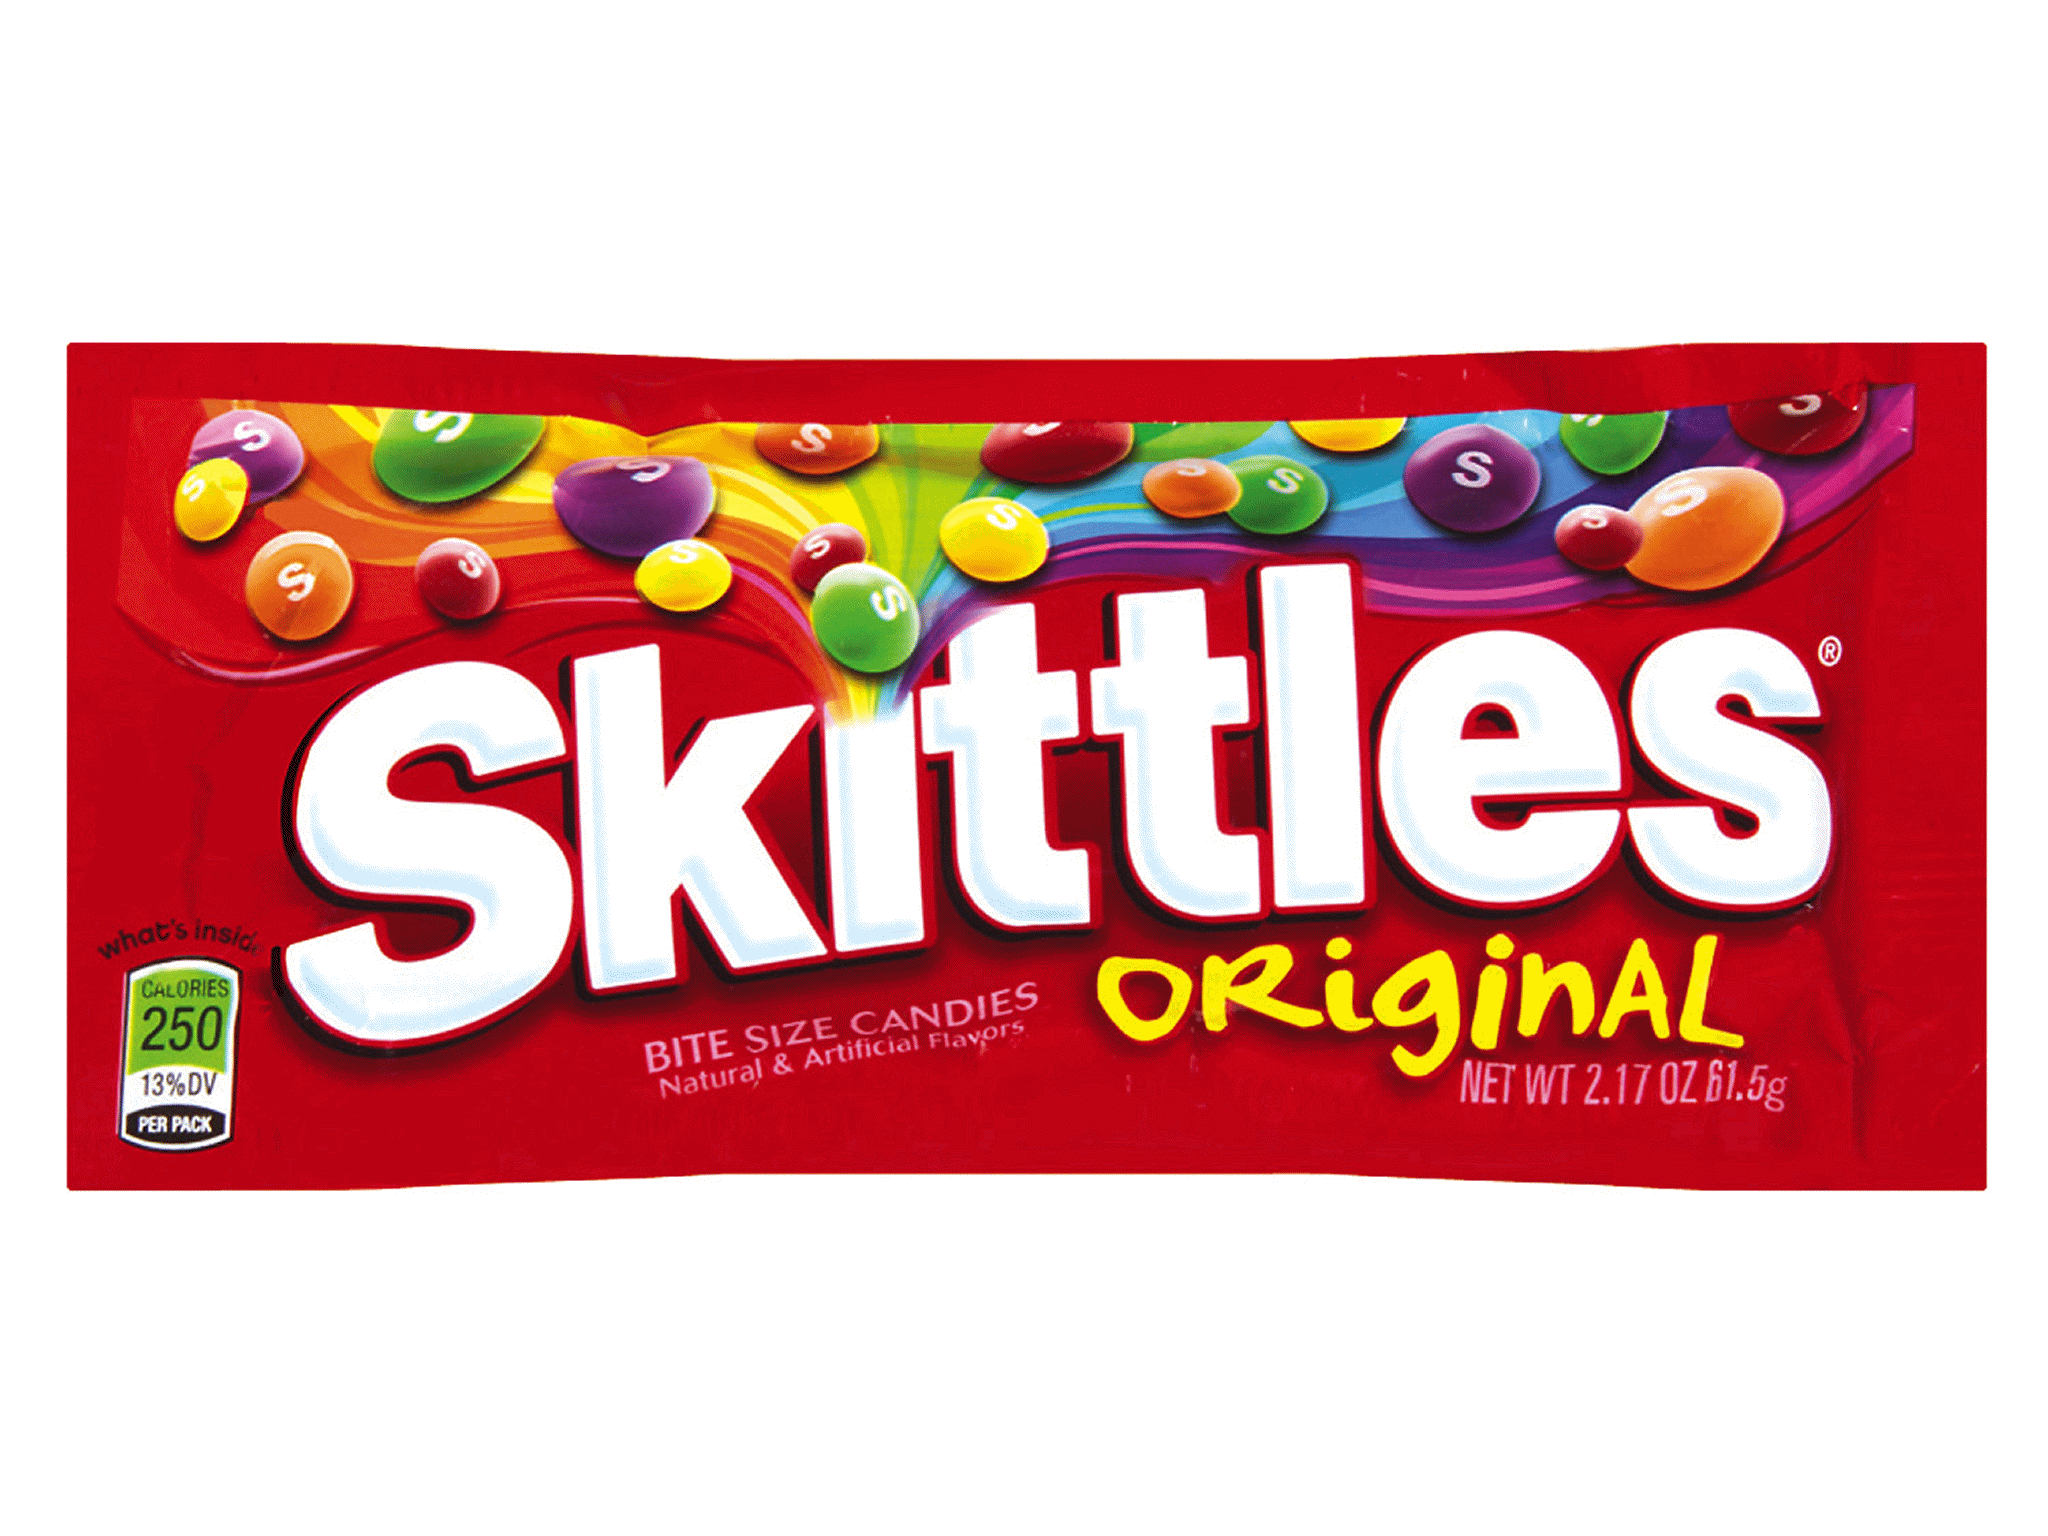 Skittles. No longer available